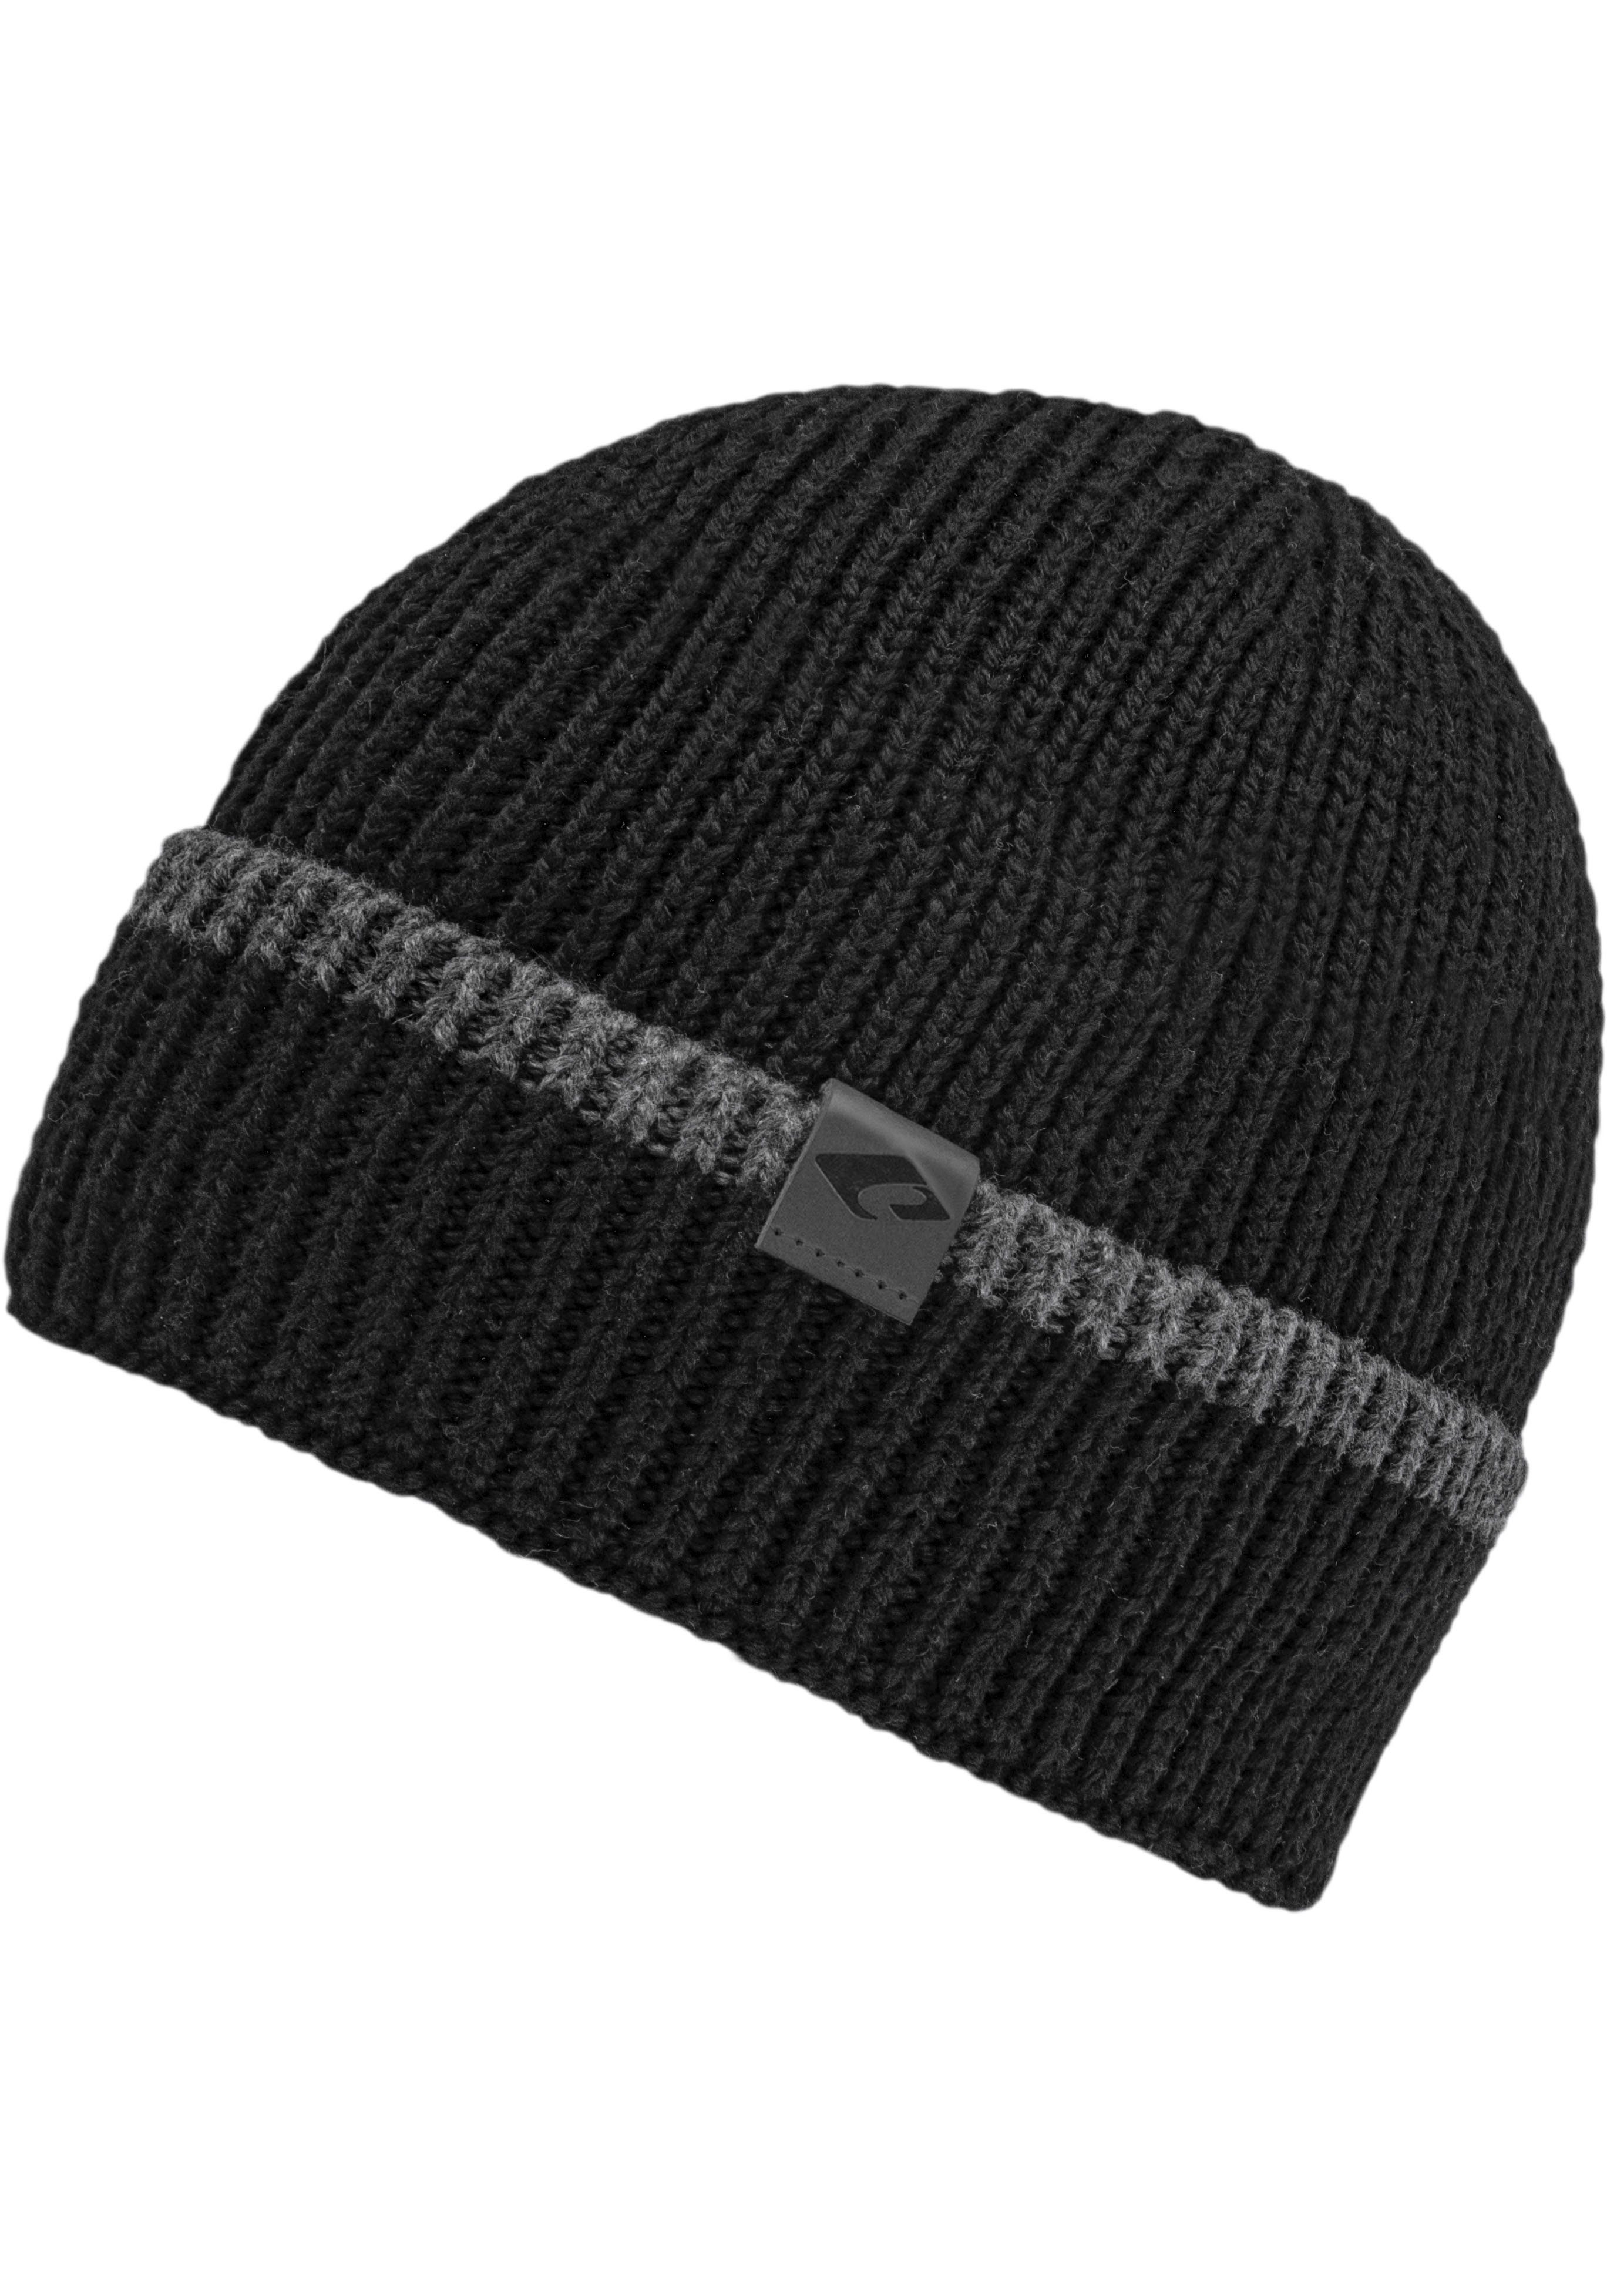 Strickmütze Kontrastfarbener Pascal Rand black Hat chillouts